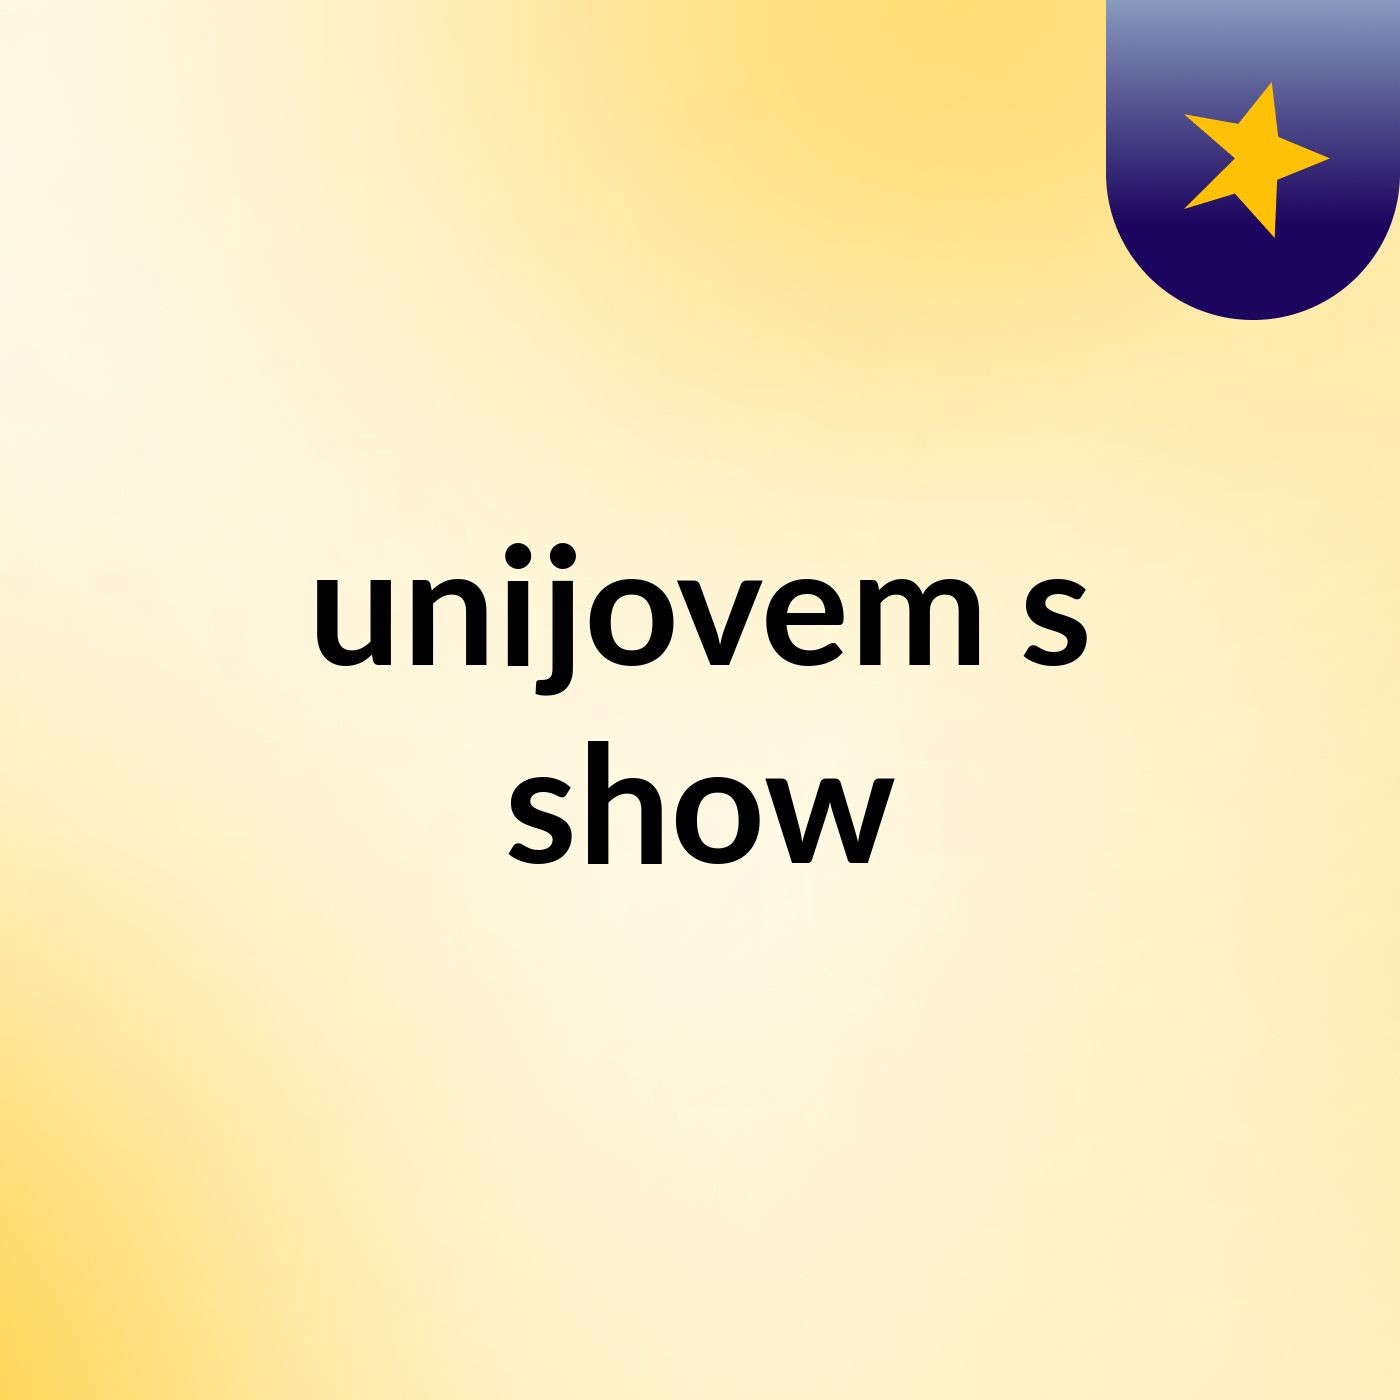 unijovem's show